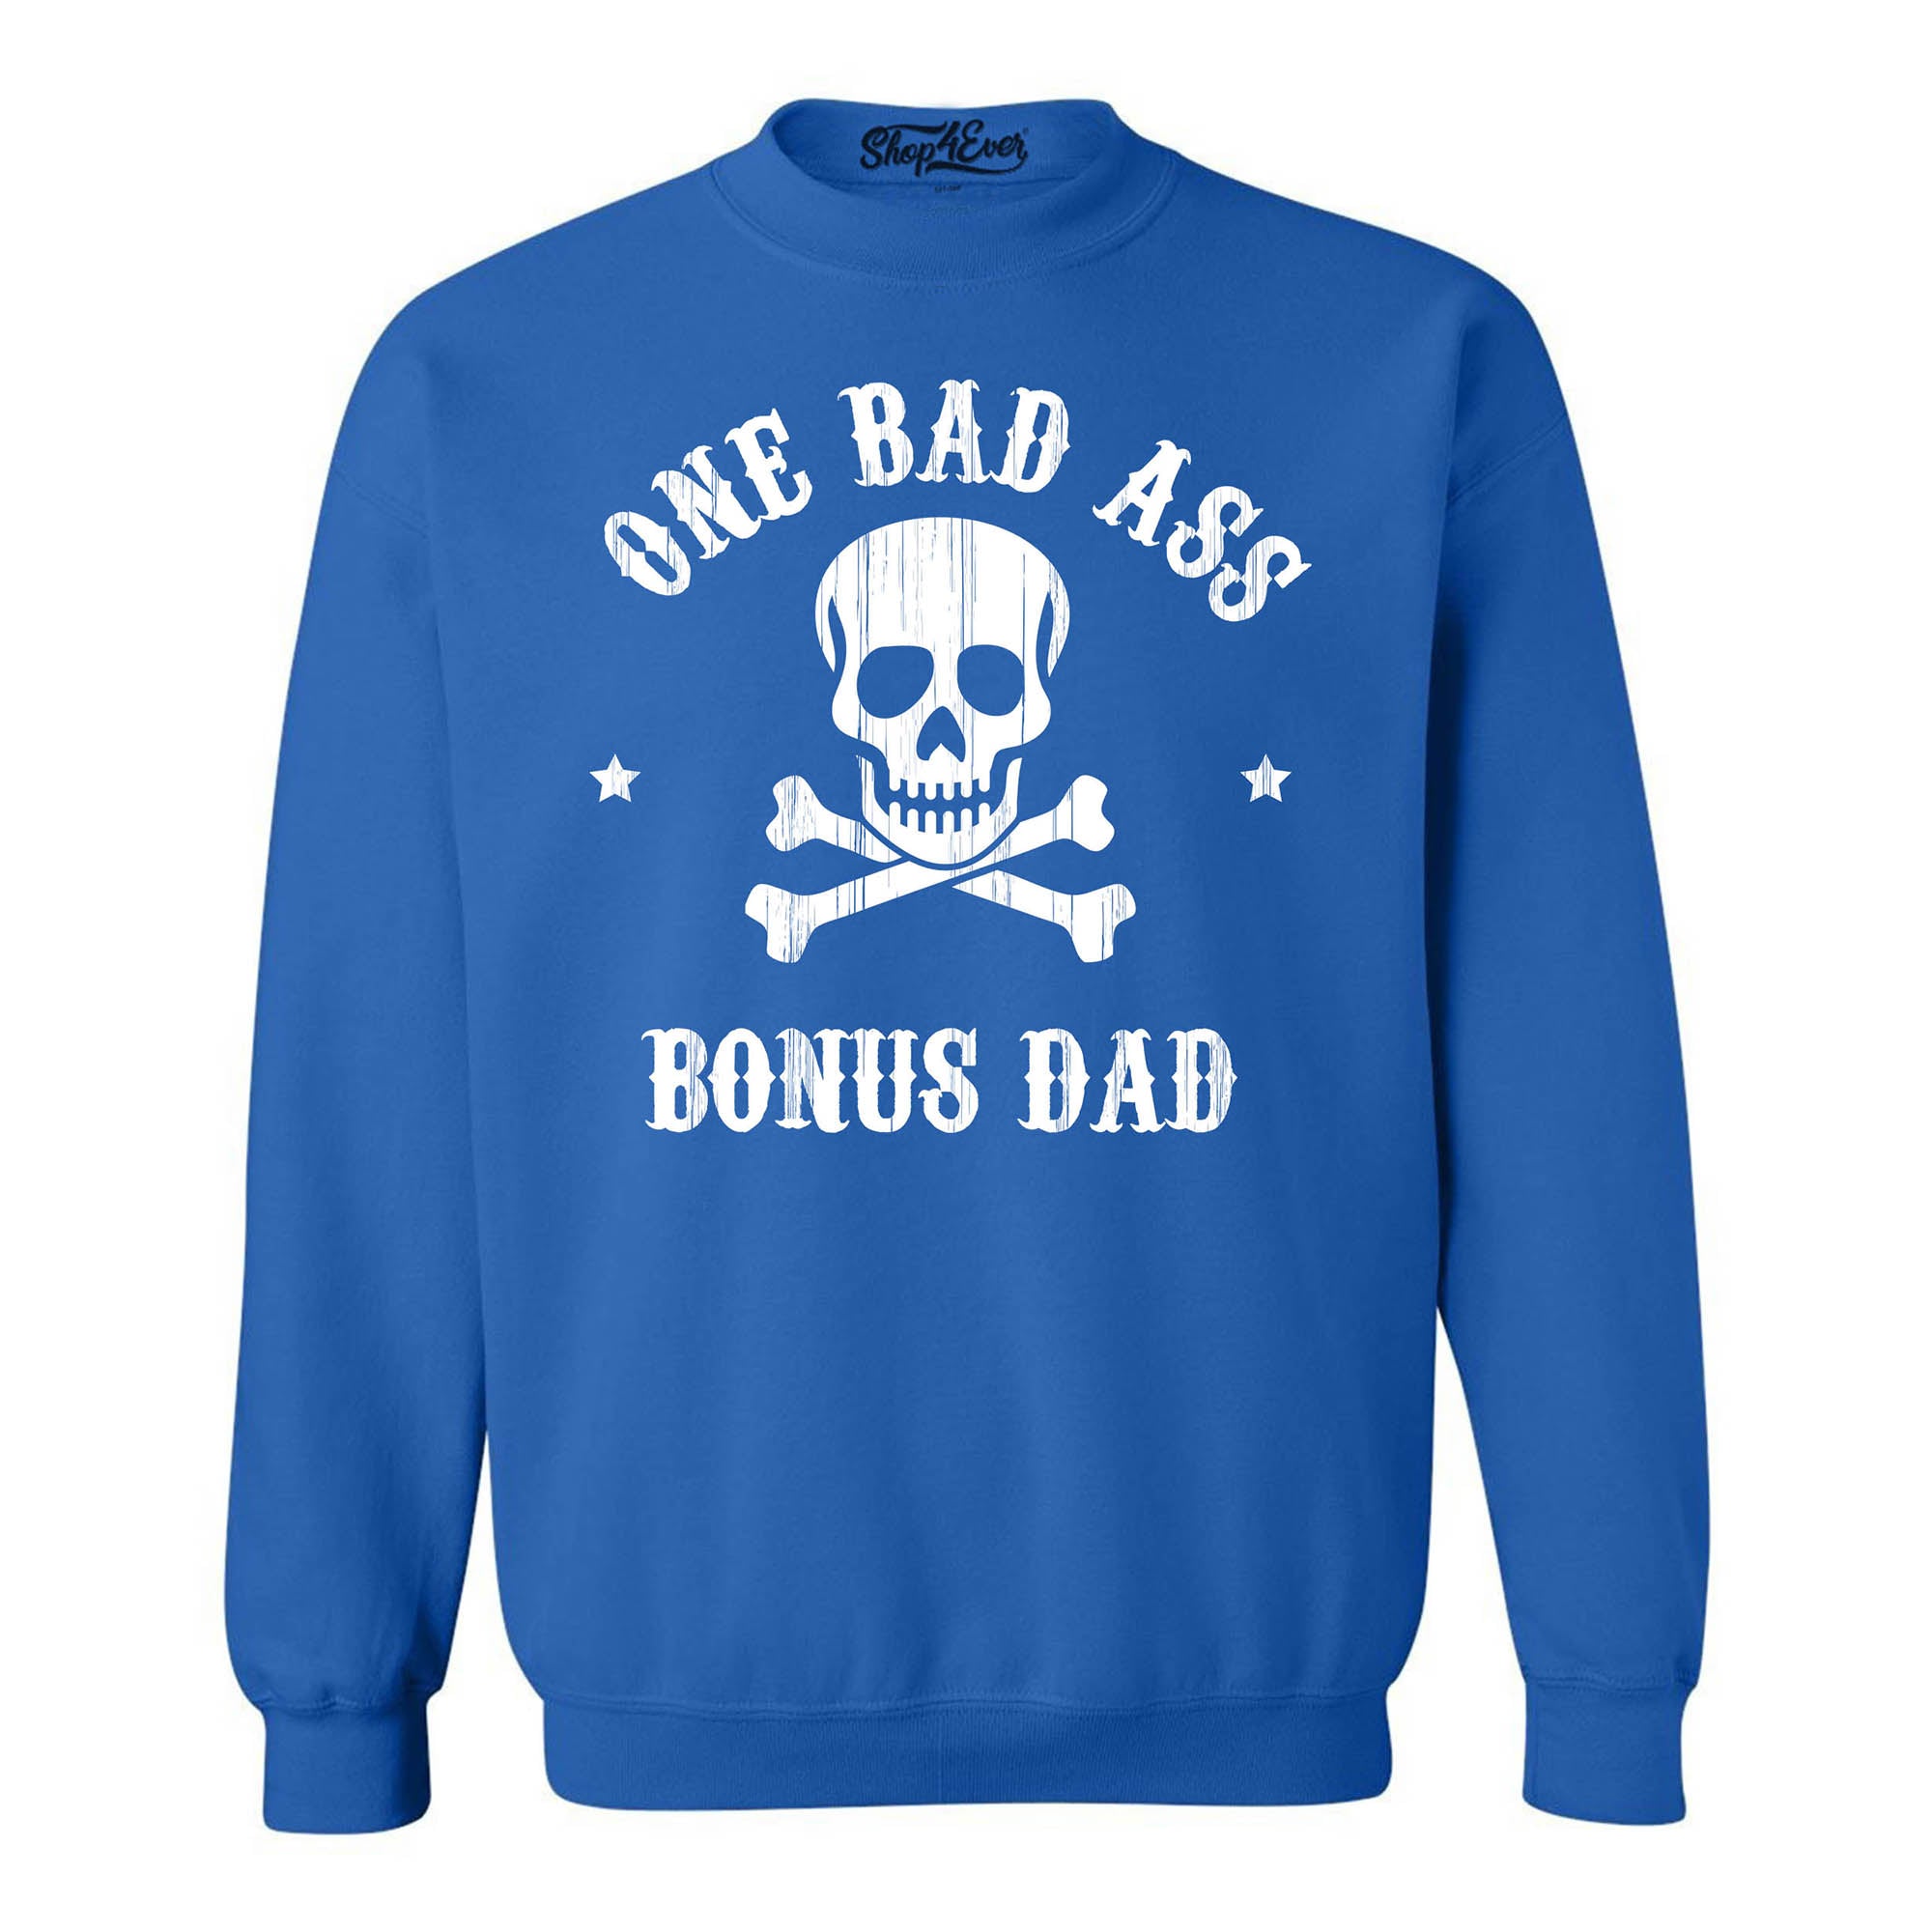 One Bad Ass Bonus Dad Crewneck Sweatshirts